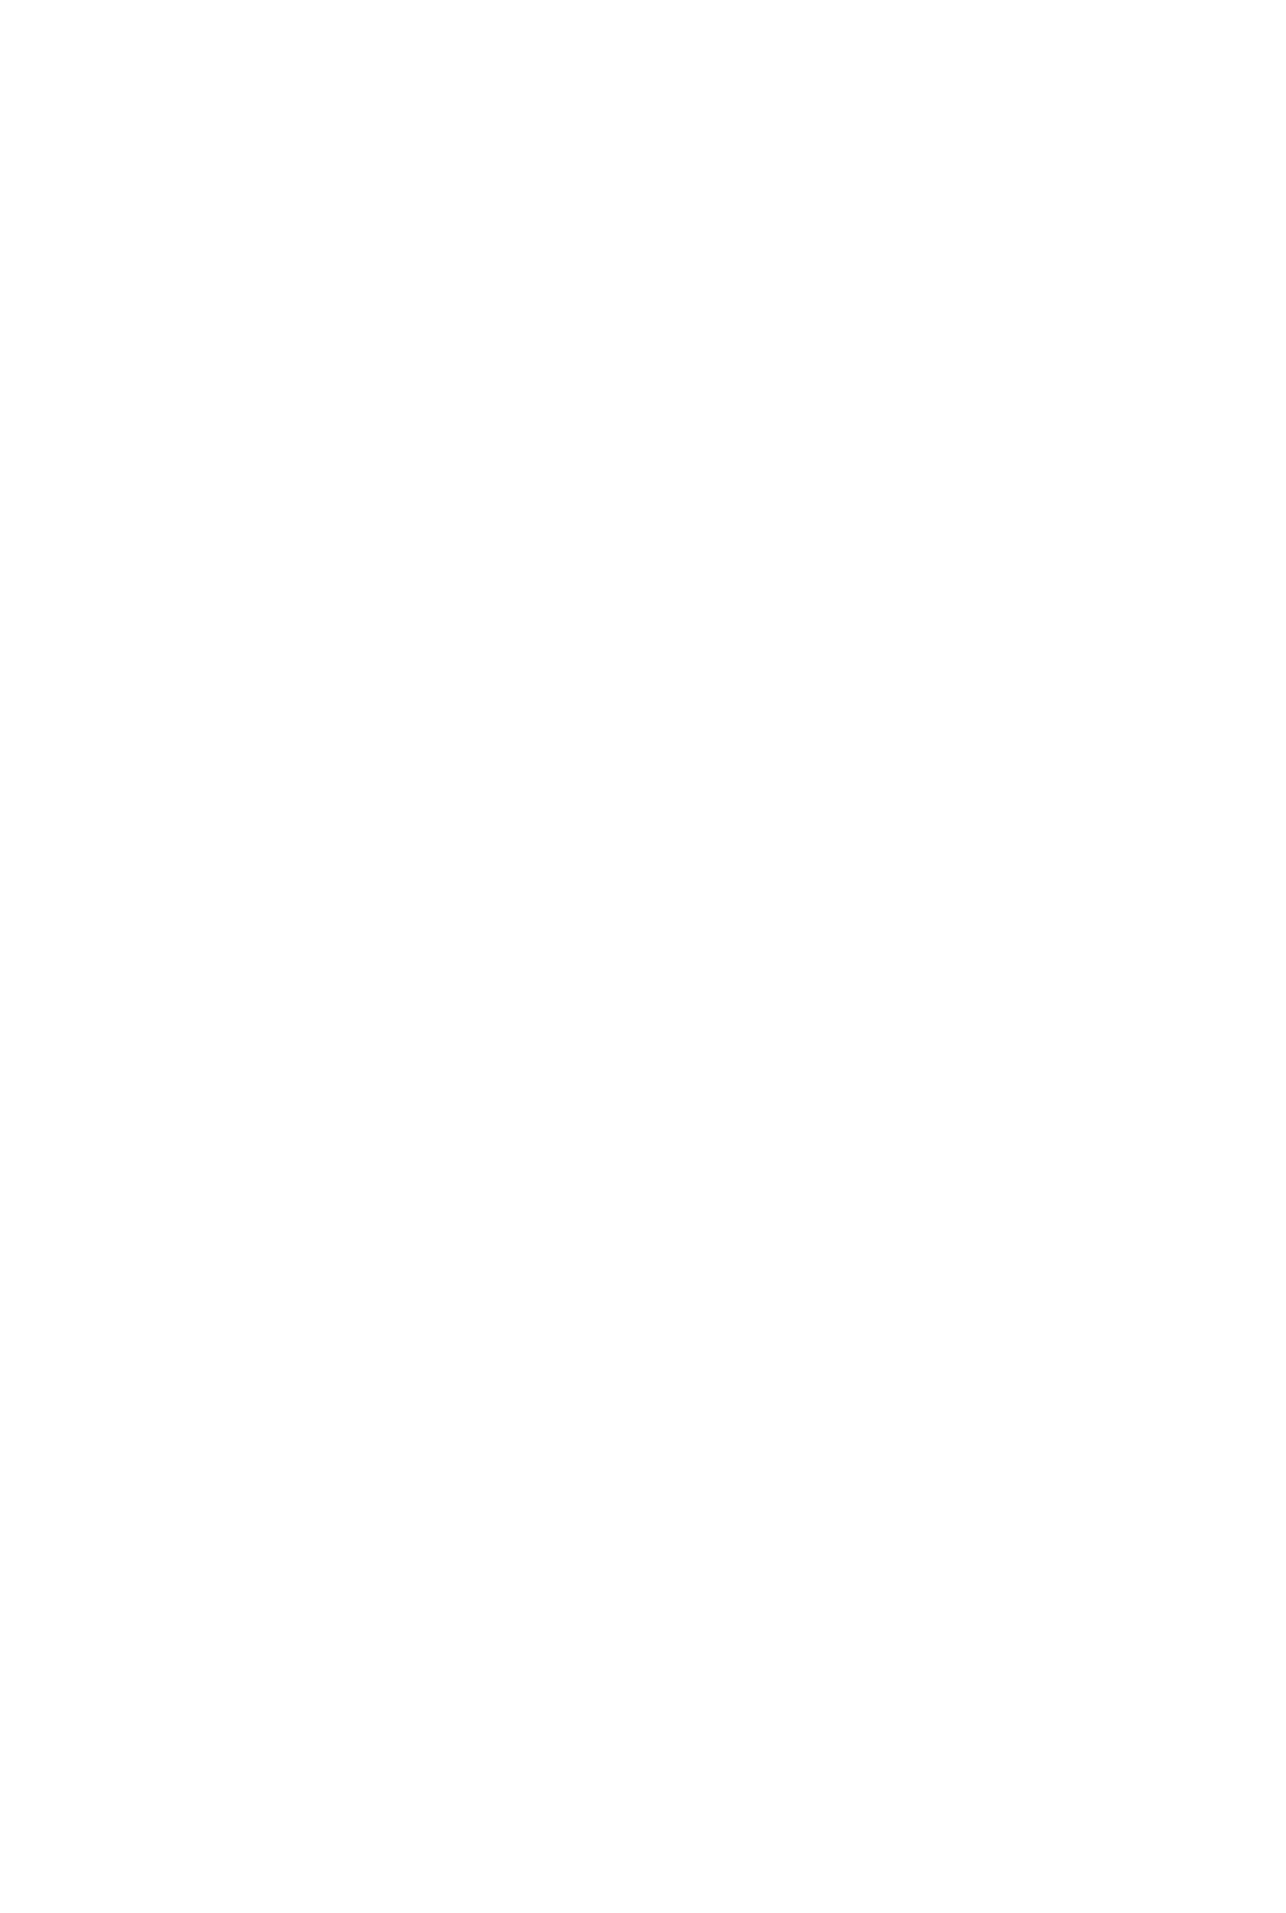 Automate-3